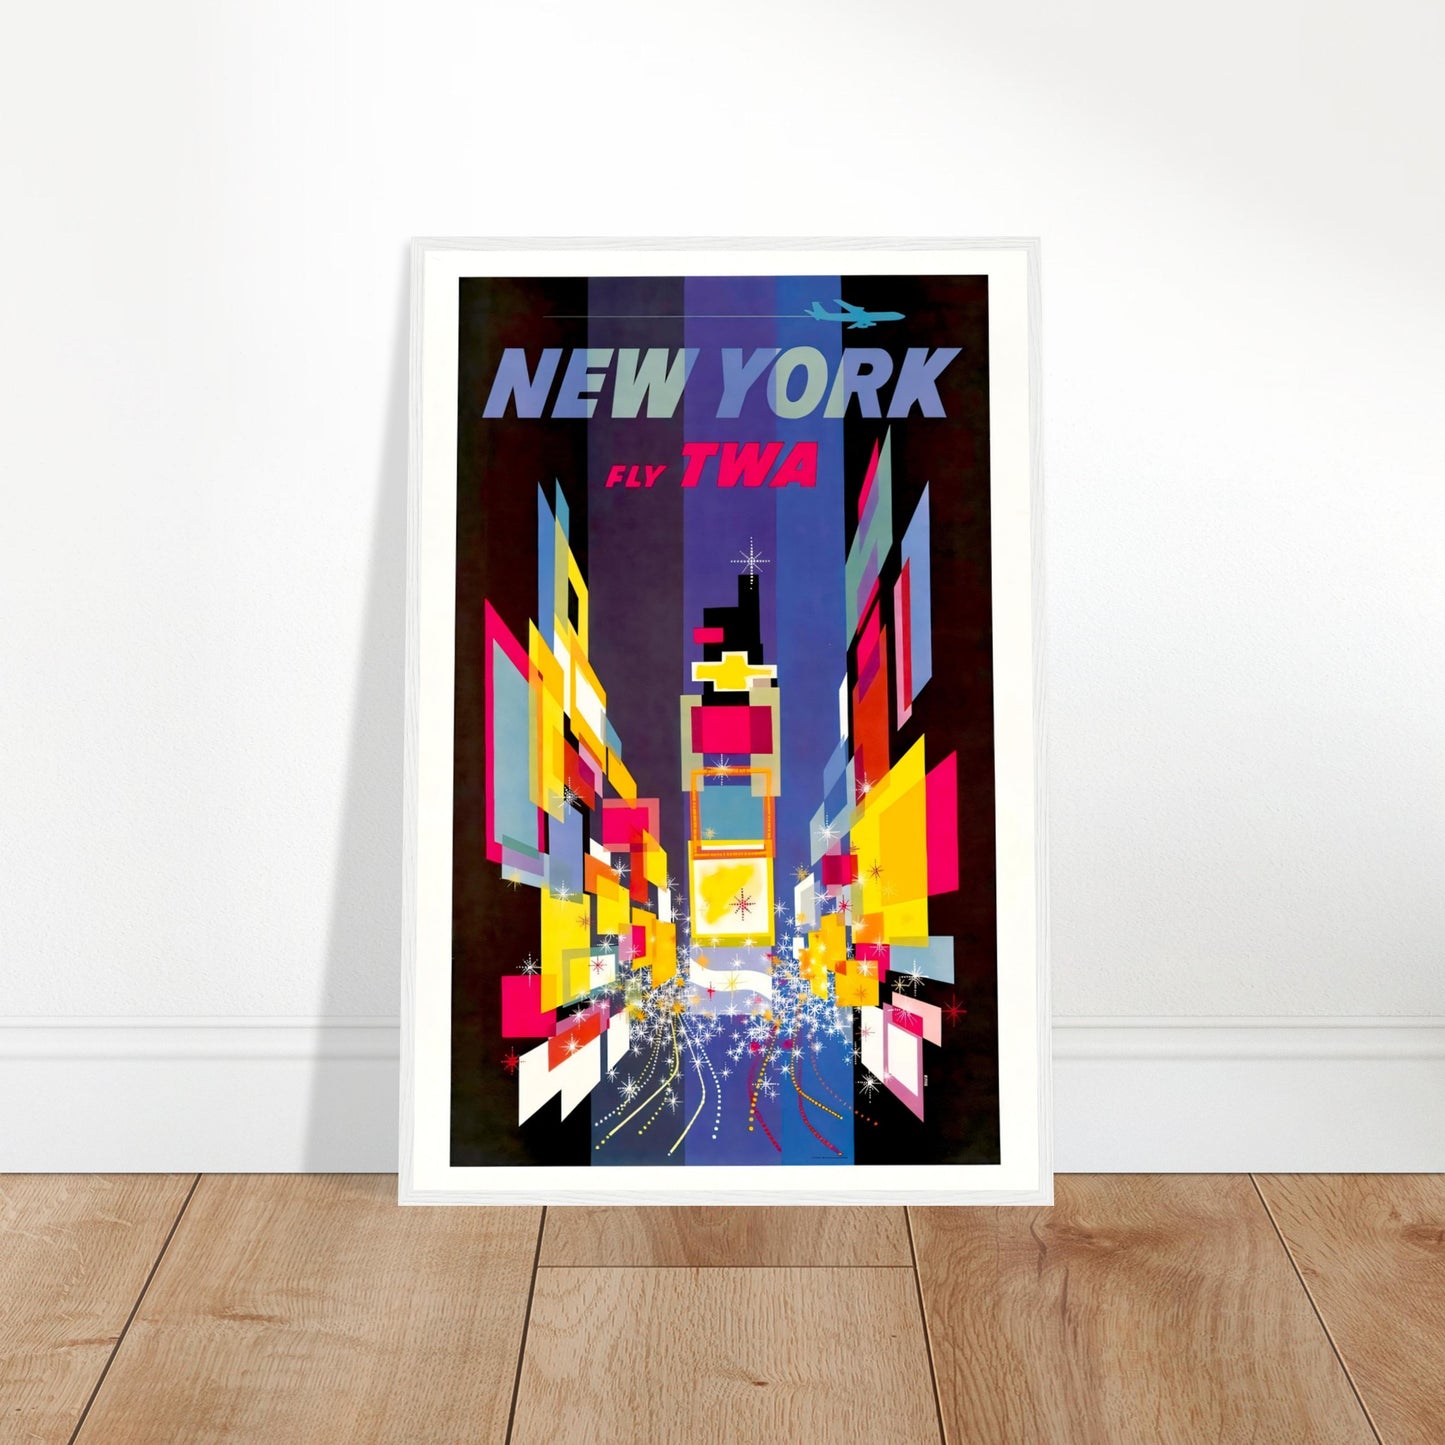 New York Vintage Poster Reprint on Premium Matte Paper